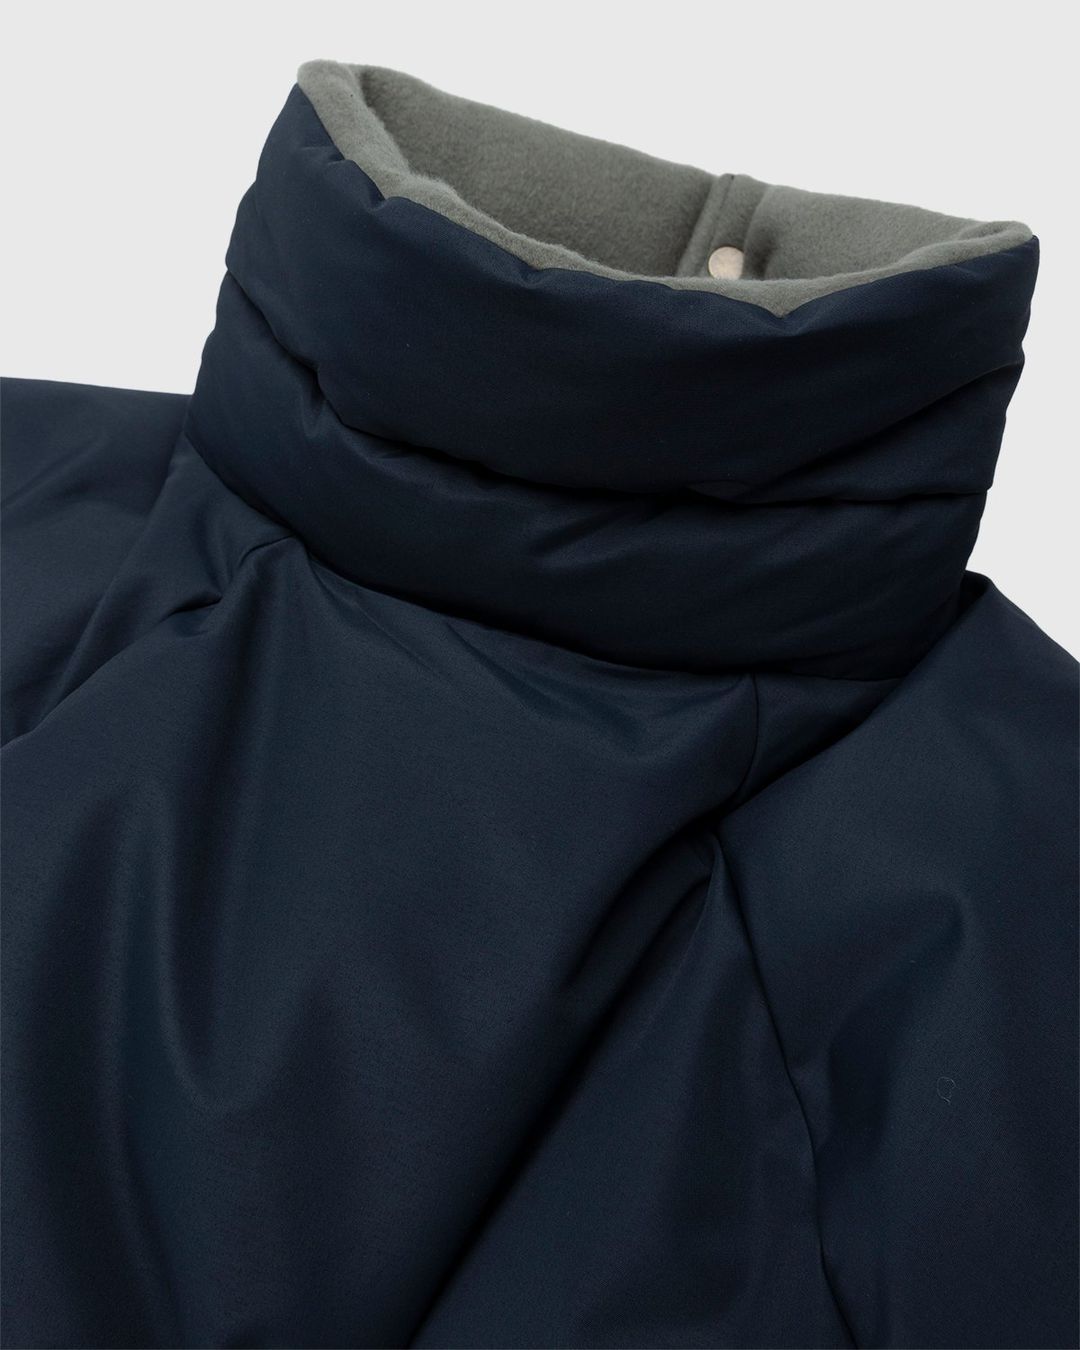 Acne Studios – Down Puffer Jacket Charcoal Grey | Highsnobiety Shop